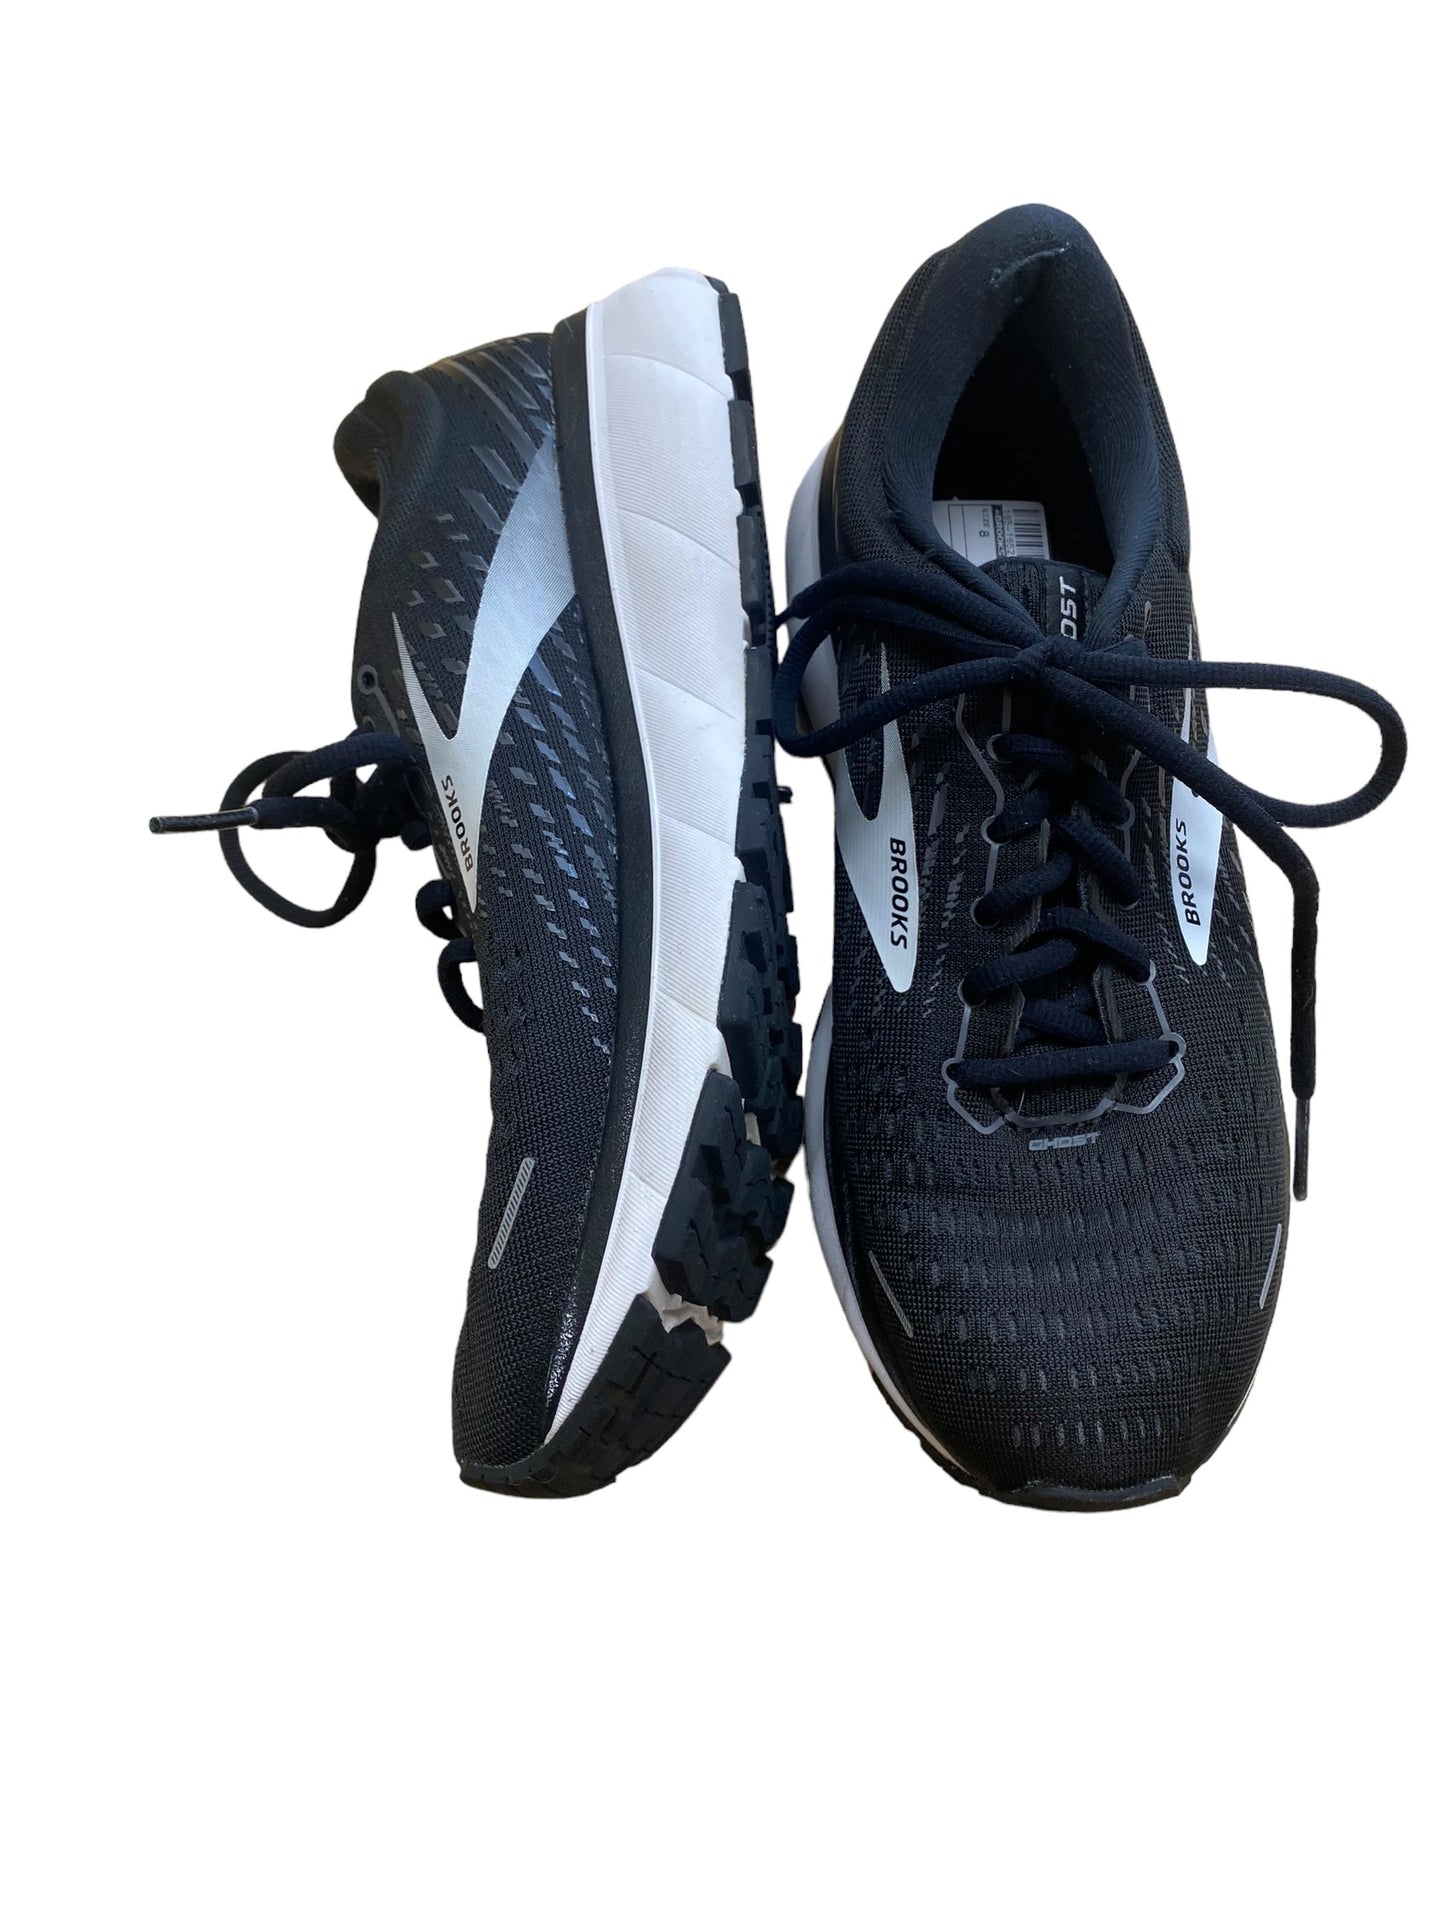 Grey Shoes Athletic Brooks, Size 8